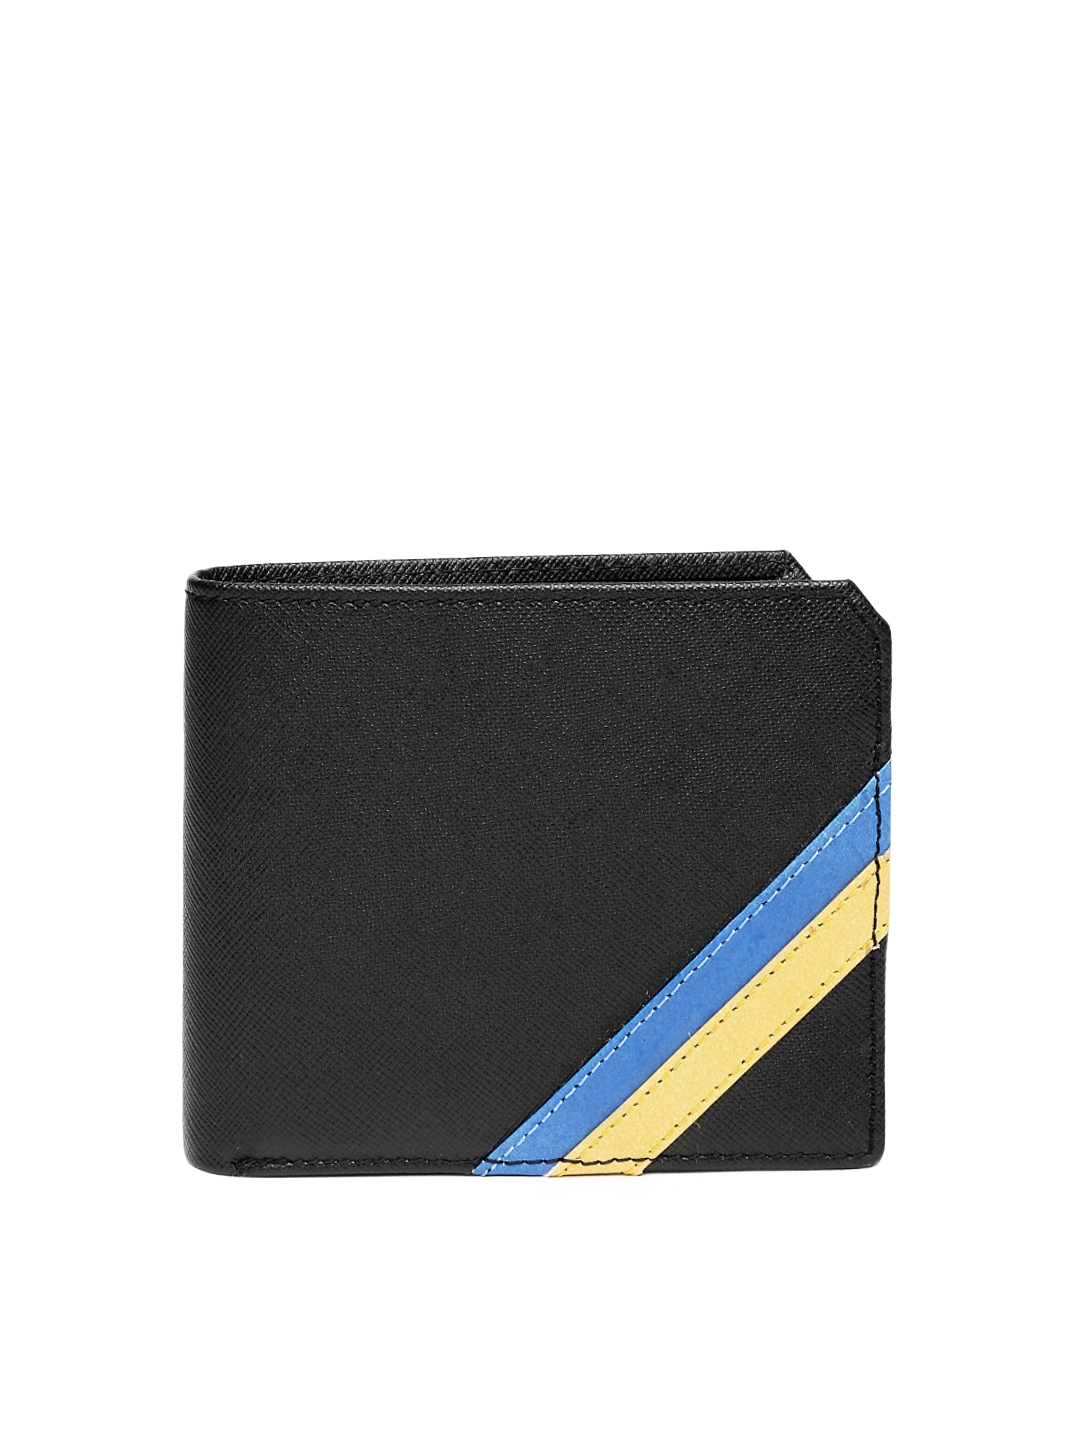 Buy U.S Polo Assn. Men Black Leather Wallet - Wallets for Men 783961